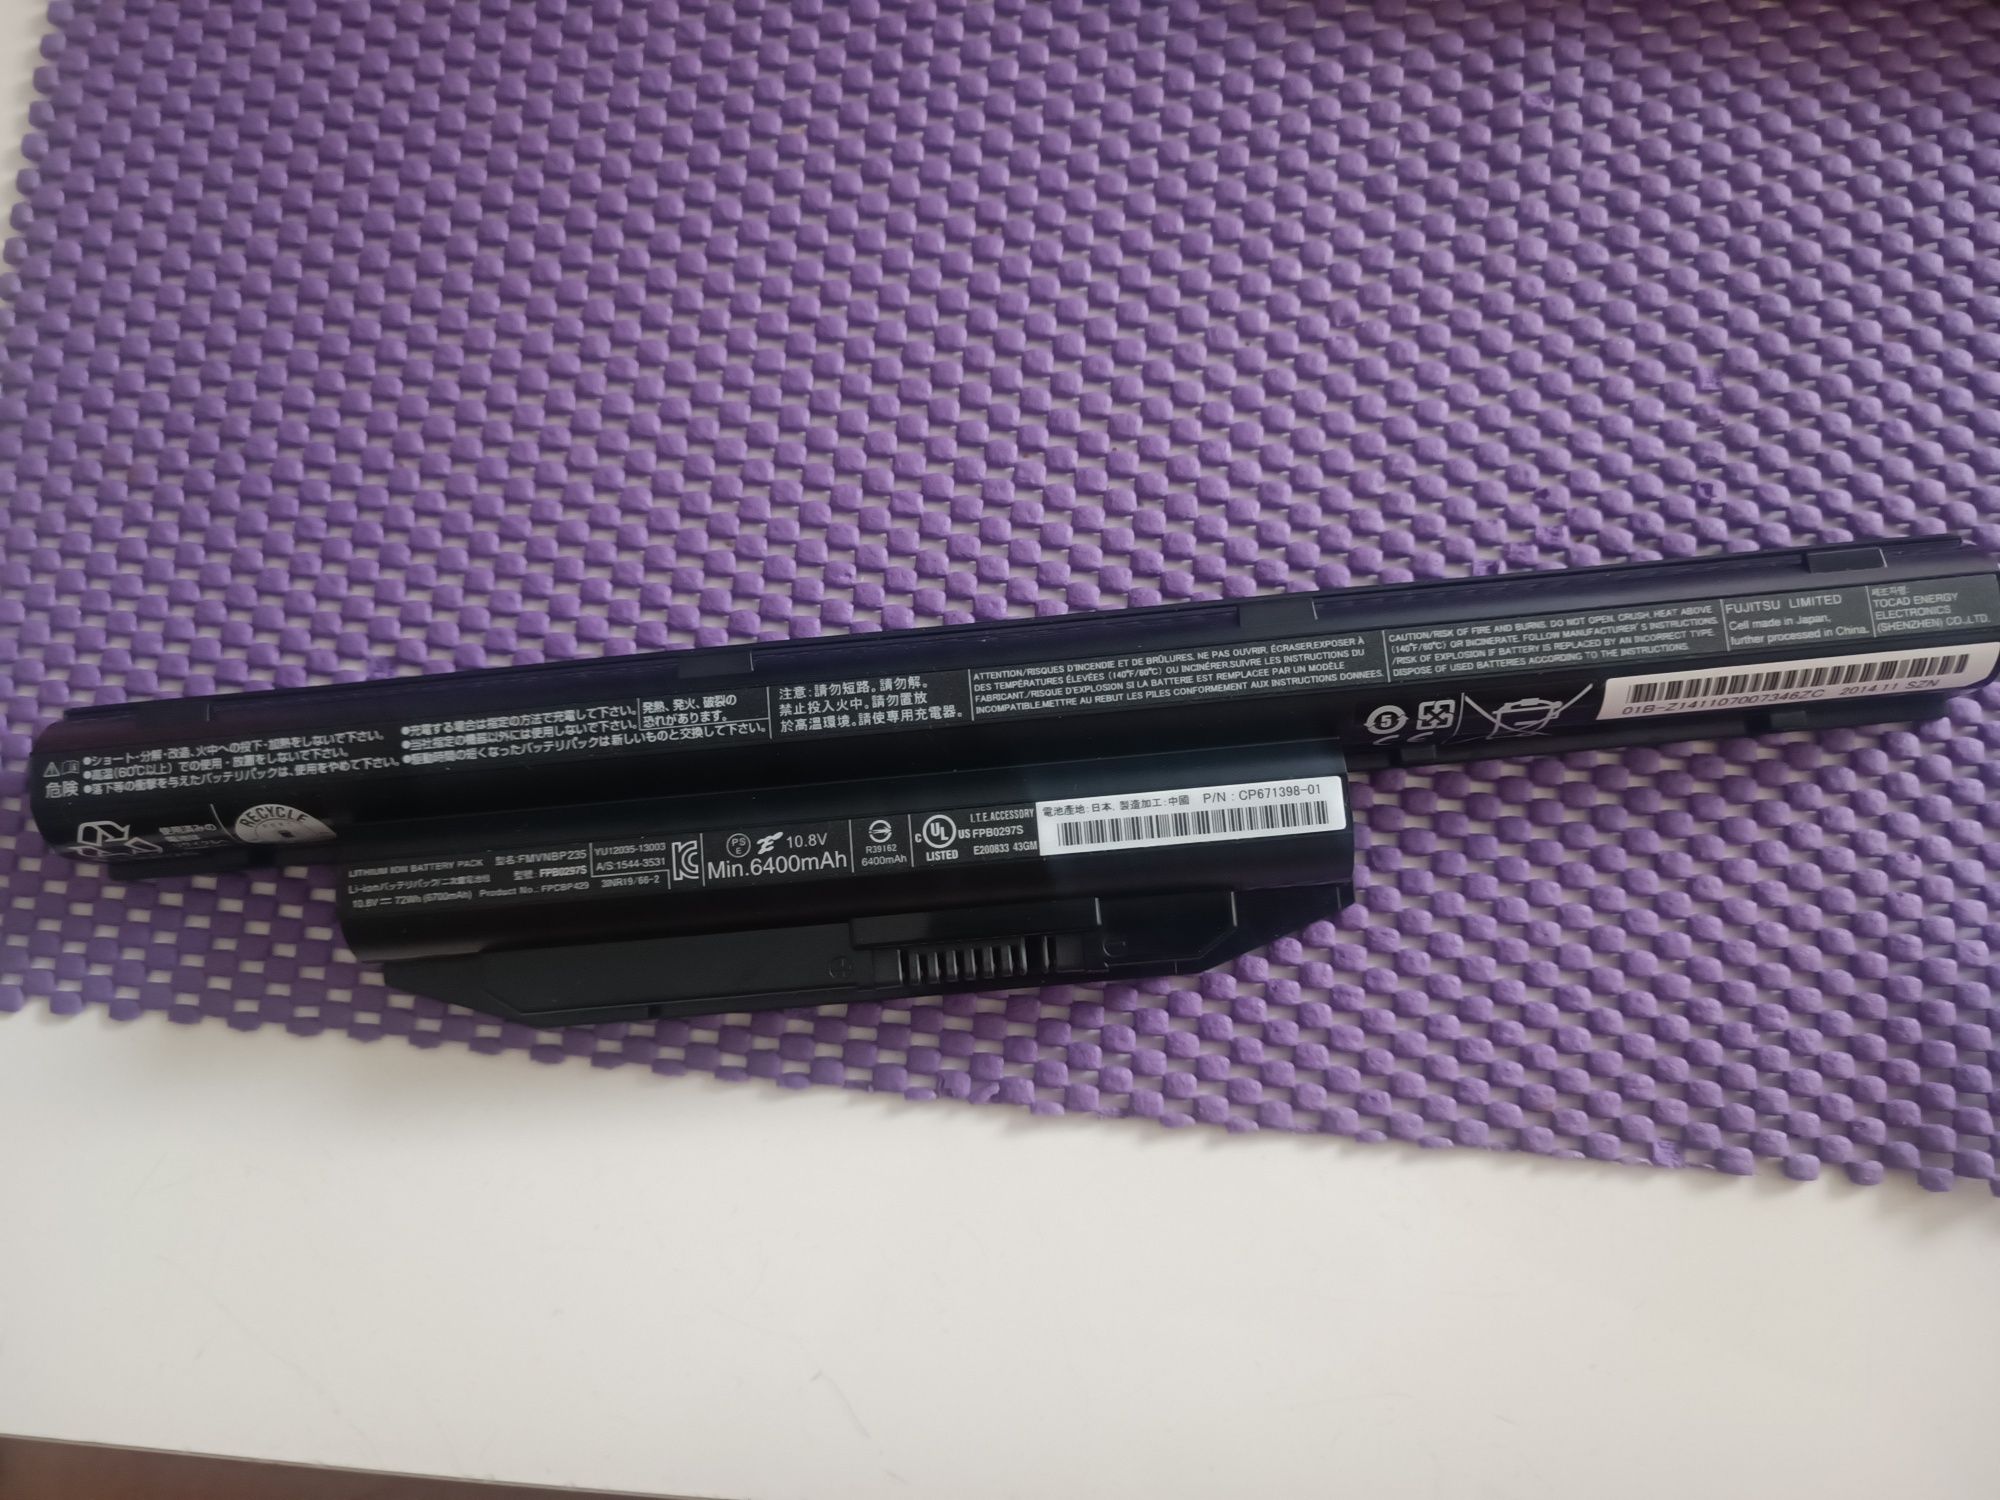 Oryginalna bateria do laptopa Fujitsu sprawna 3,5h